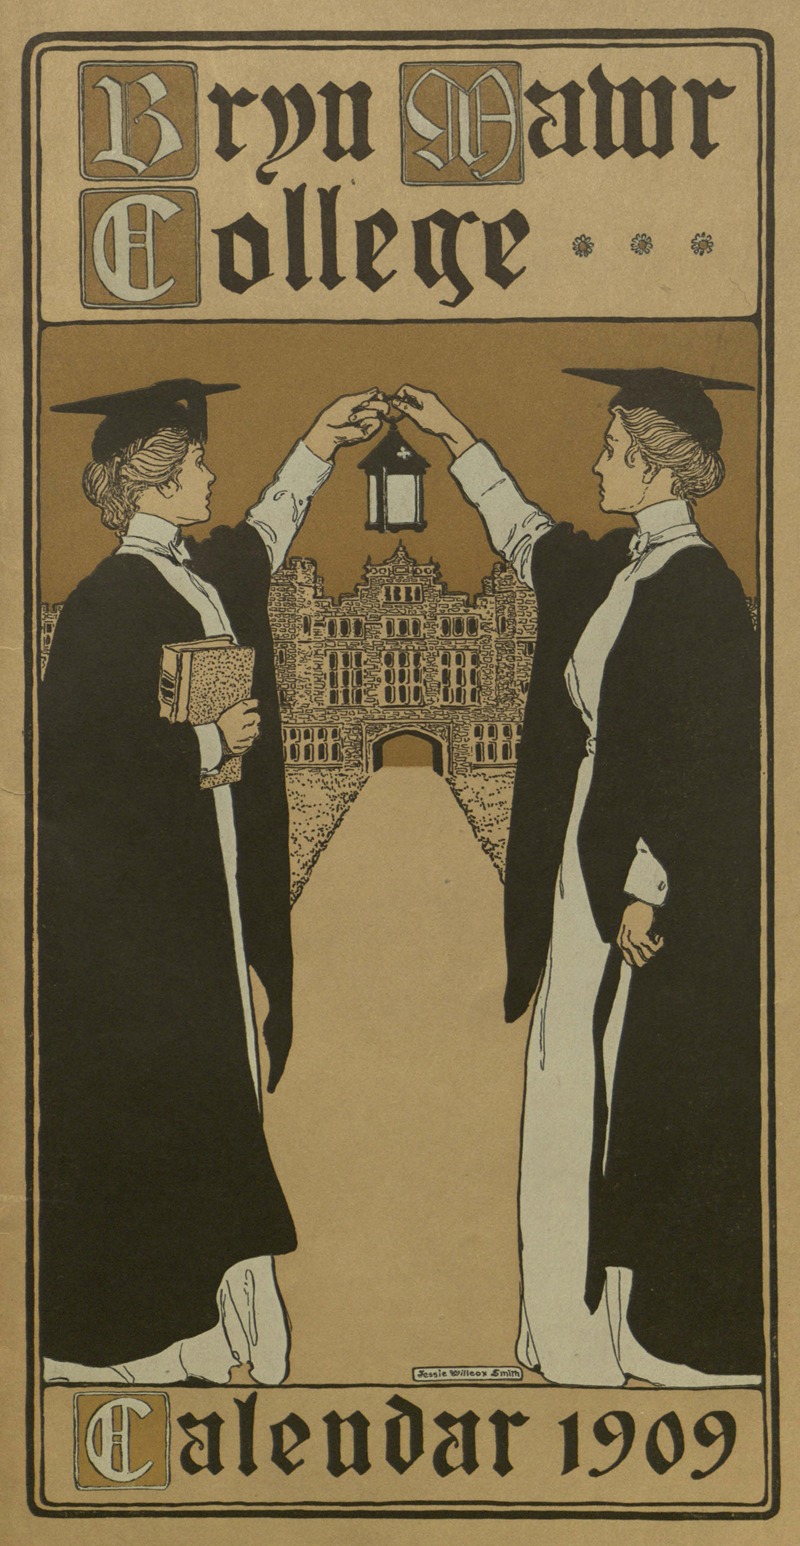 Jessie Willcox Smith - Bryn Mawr College Calendar 1909